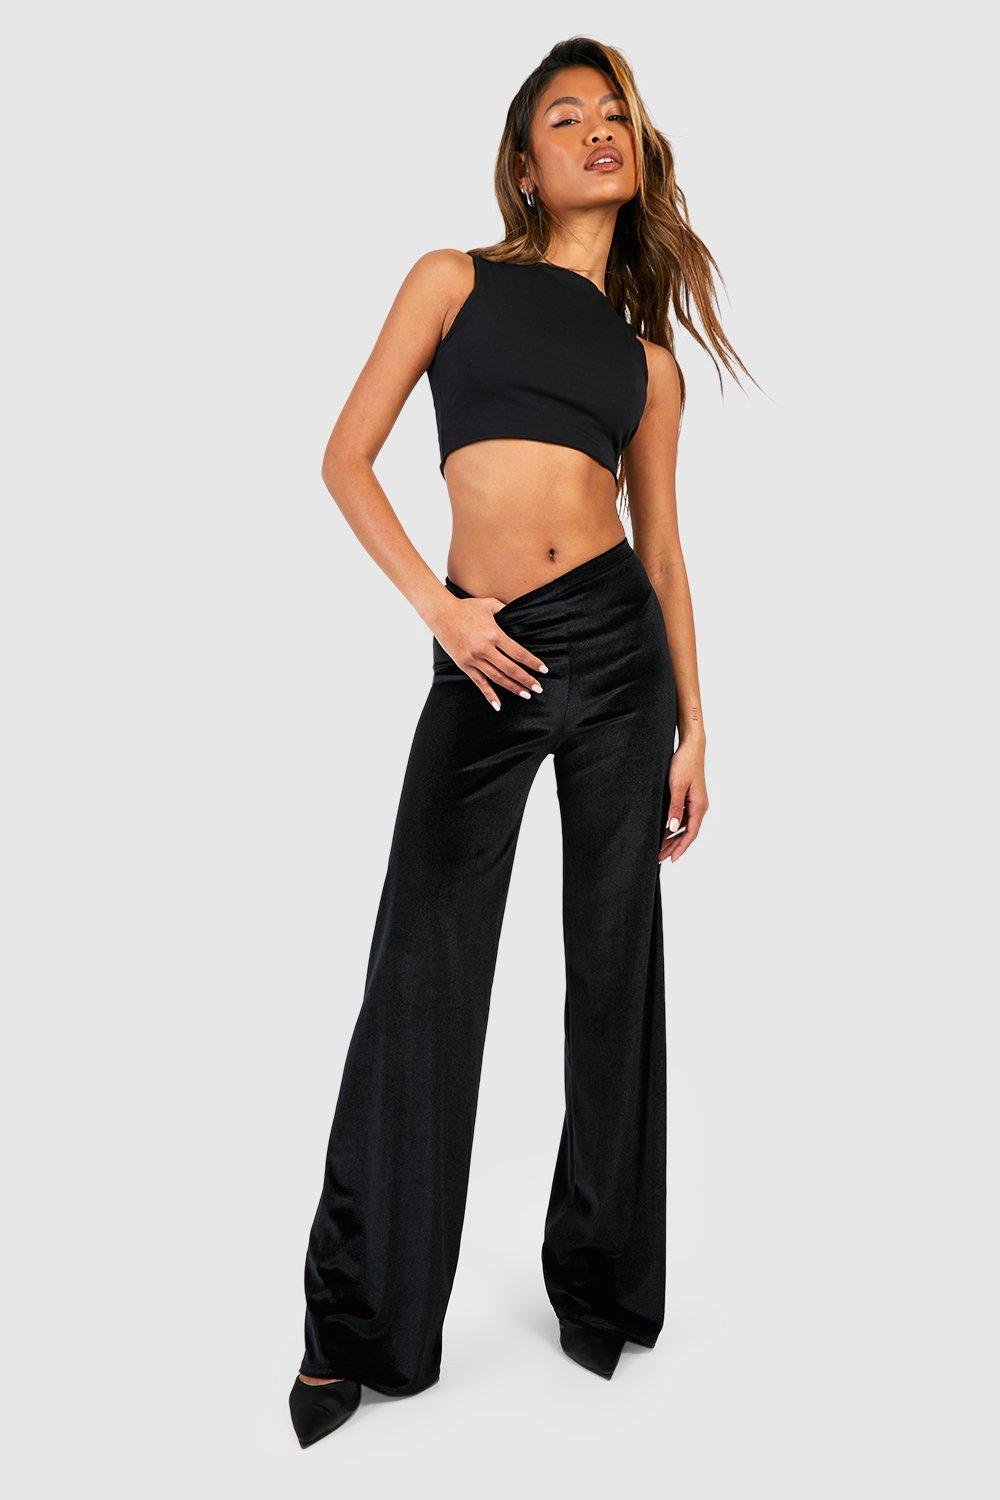 https://media.boohoo.com/i/boohoo/gzz71424_black_xl_2/female-black-velvet-high-waisted-wide-leg-trousers